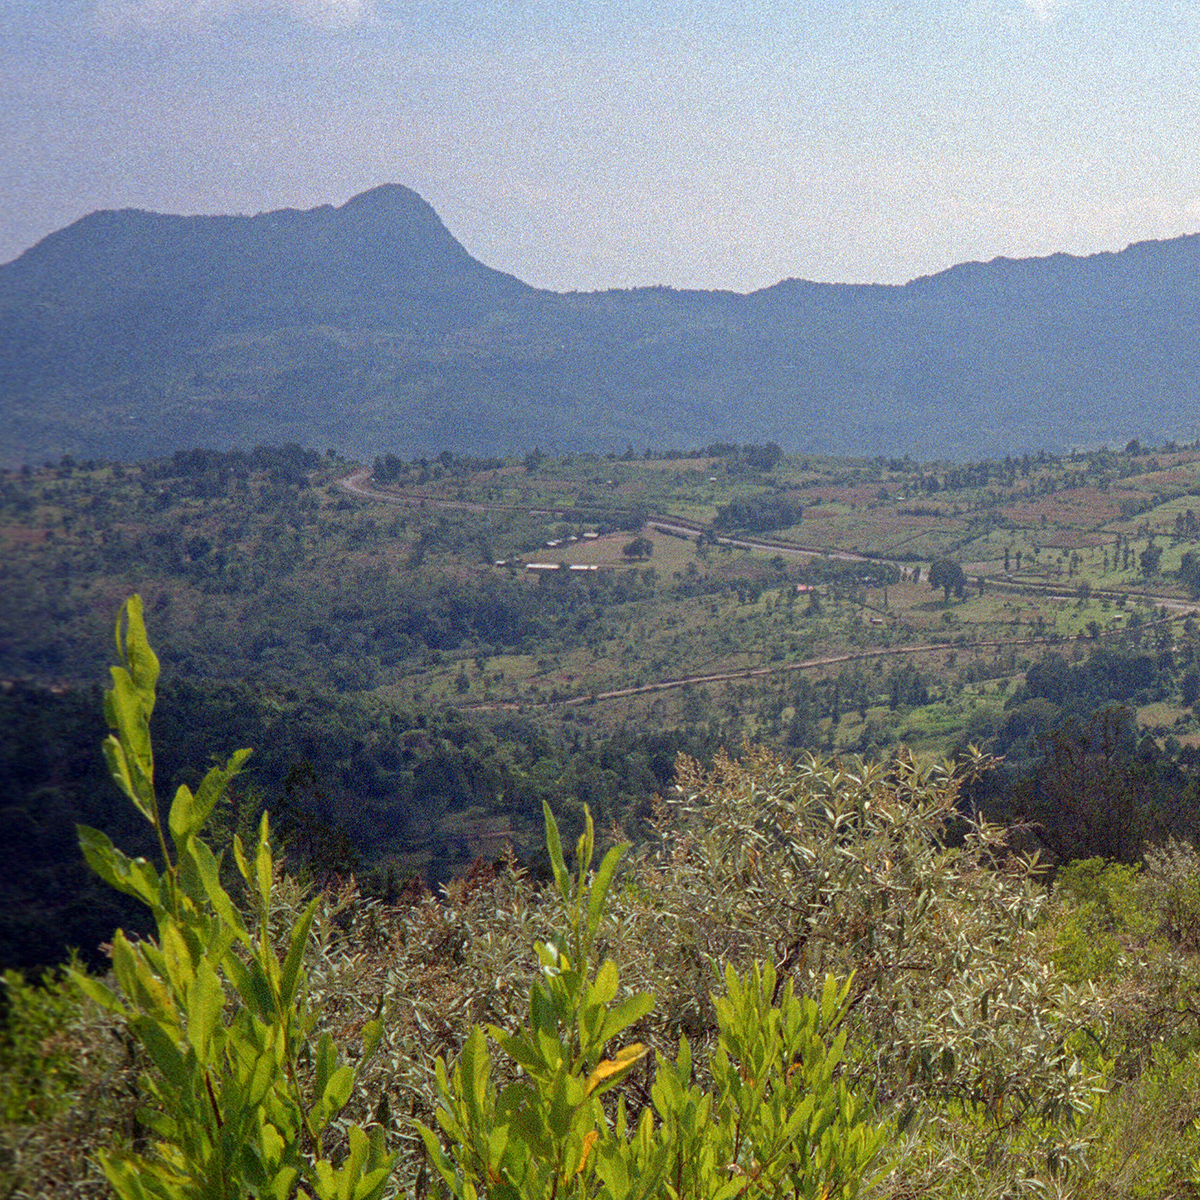 Looking over the countryside east of Kabarnet, looking toward Morop Hills